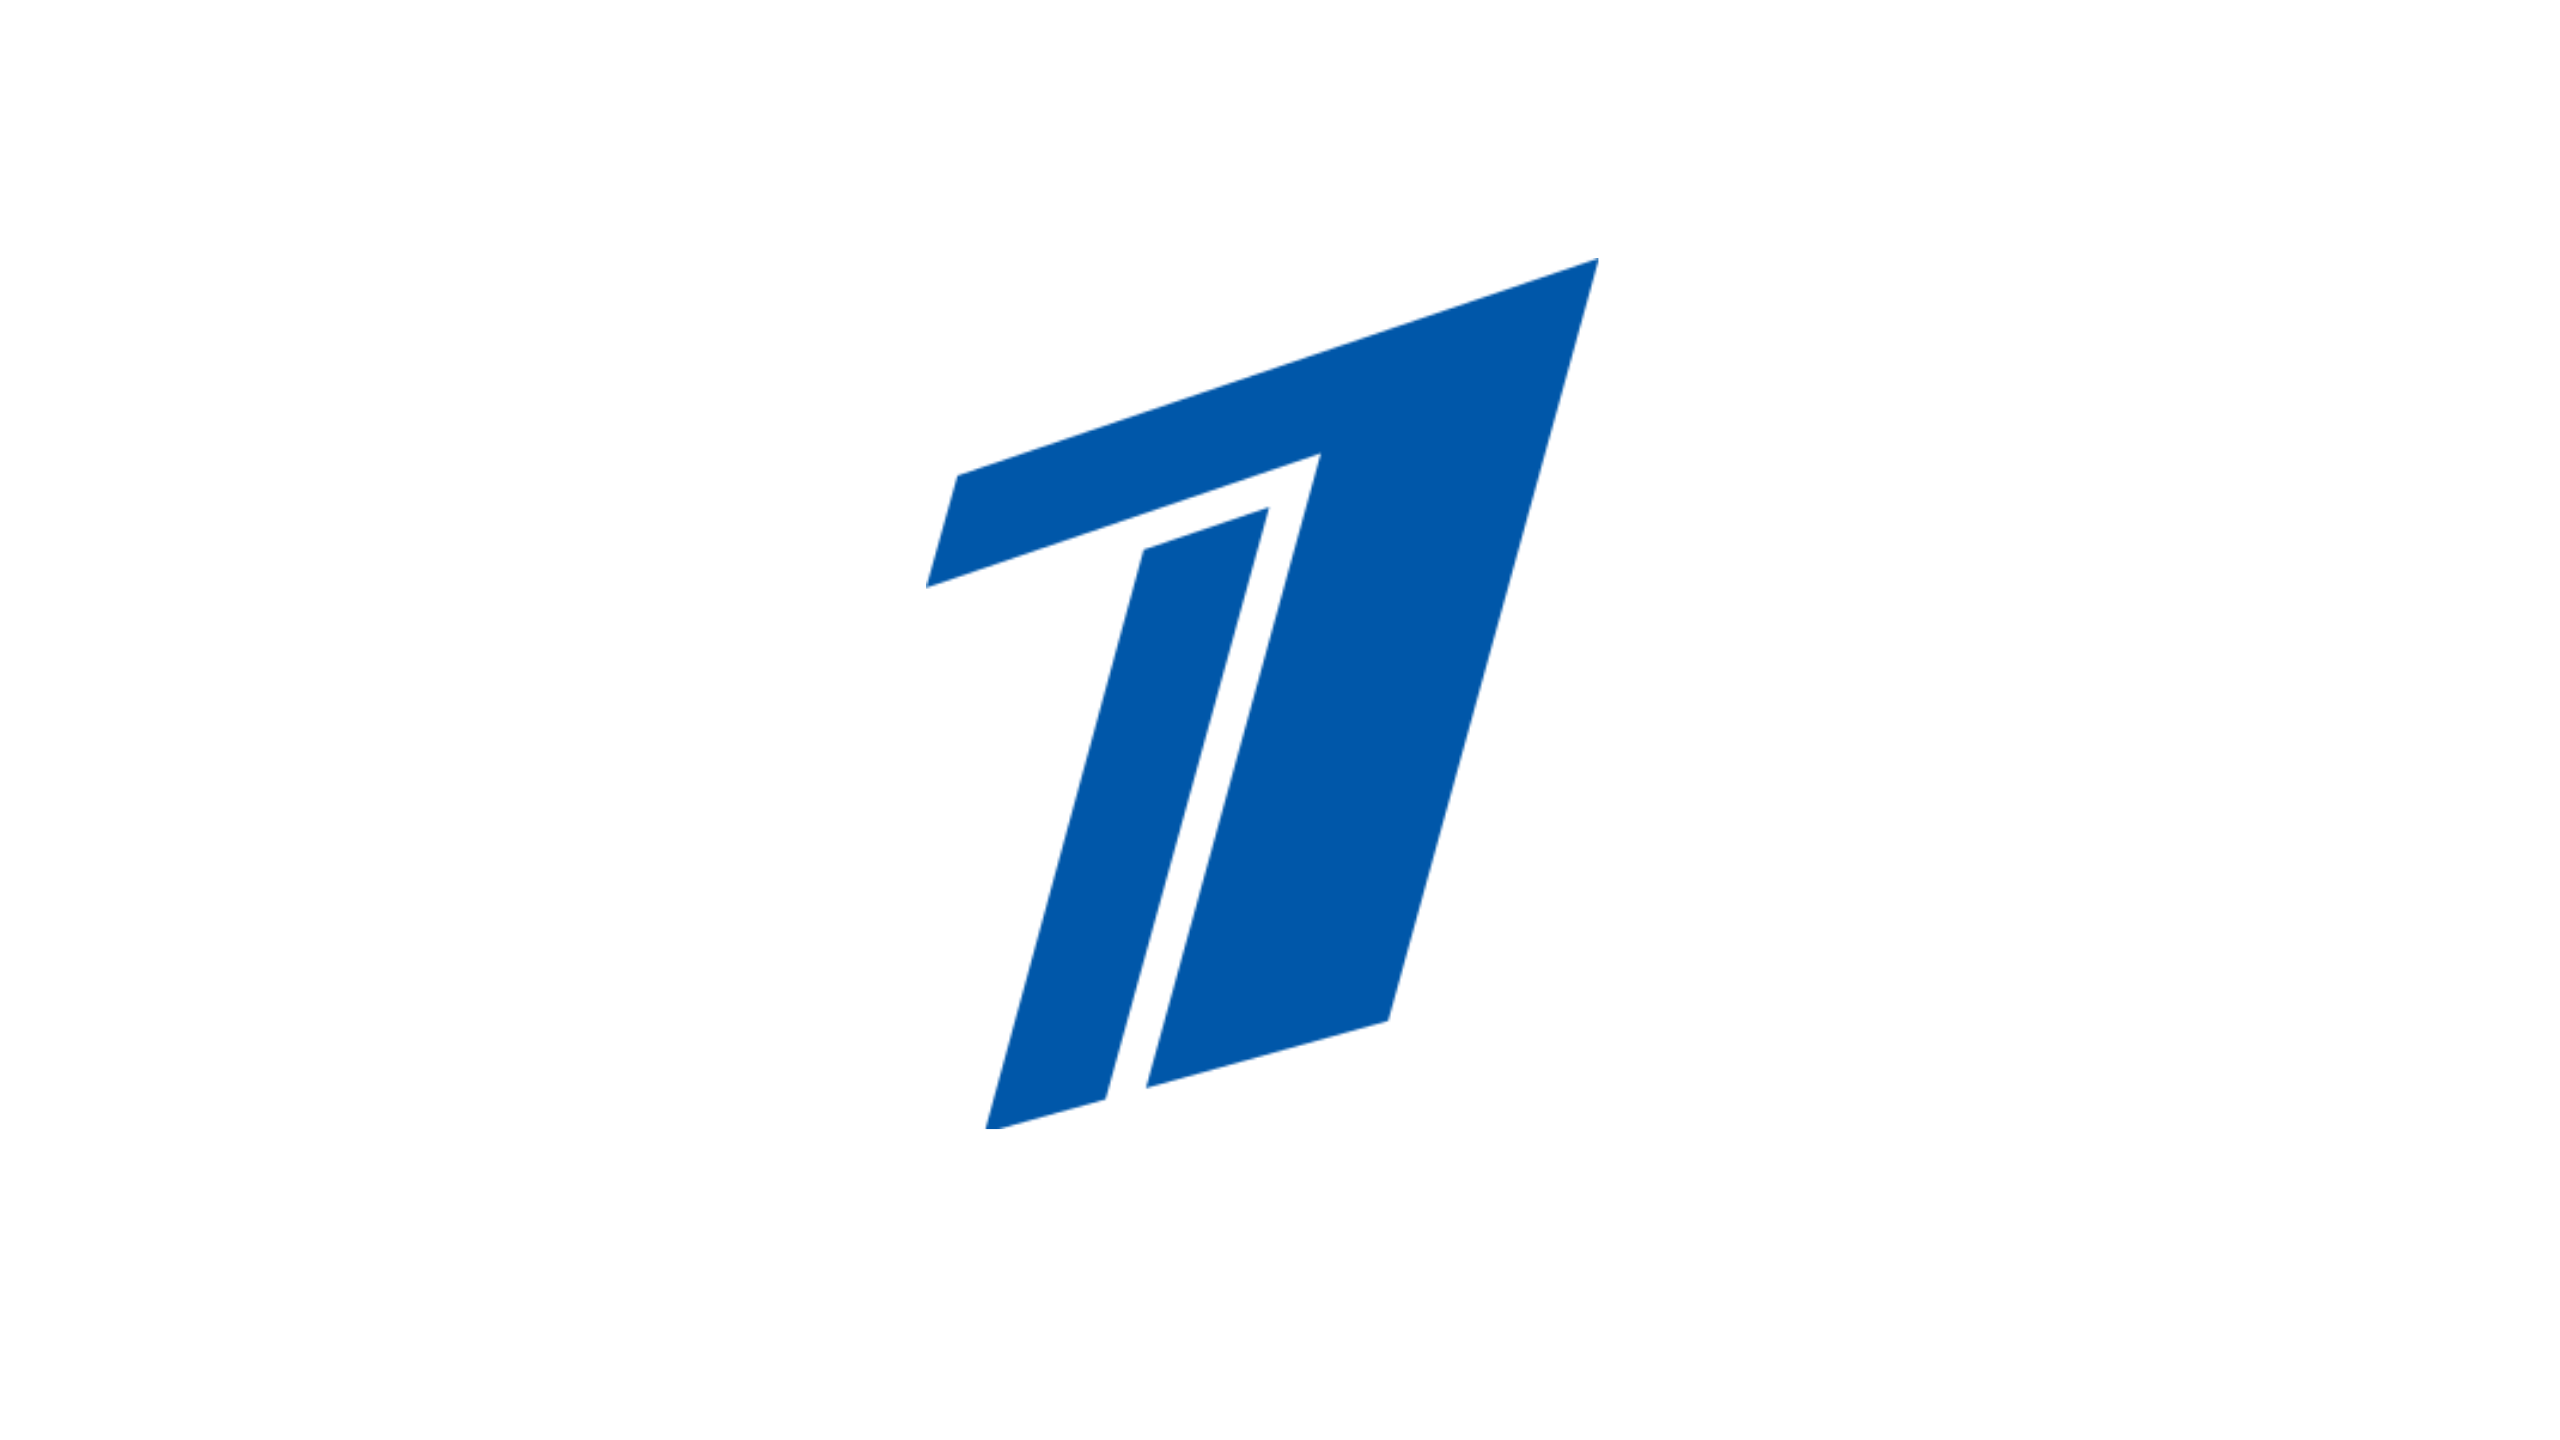 1 tv ru. Первый канал логотип. Первый канал Евразия логотип. Первый канал логотип 2002. Первый Балтийский канал.